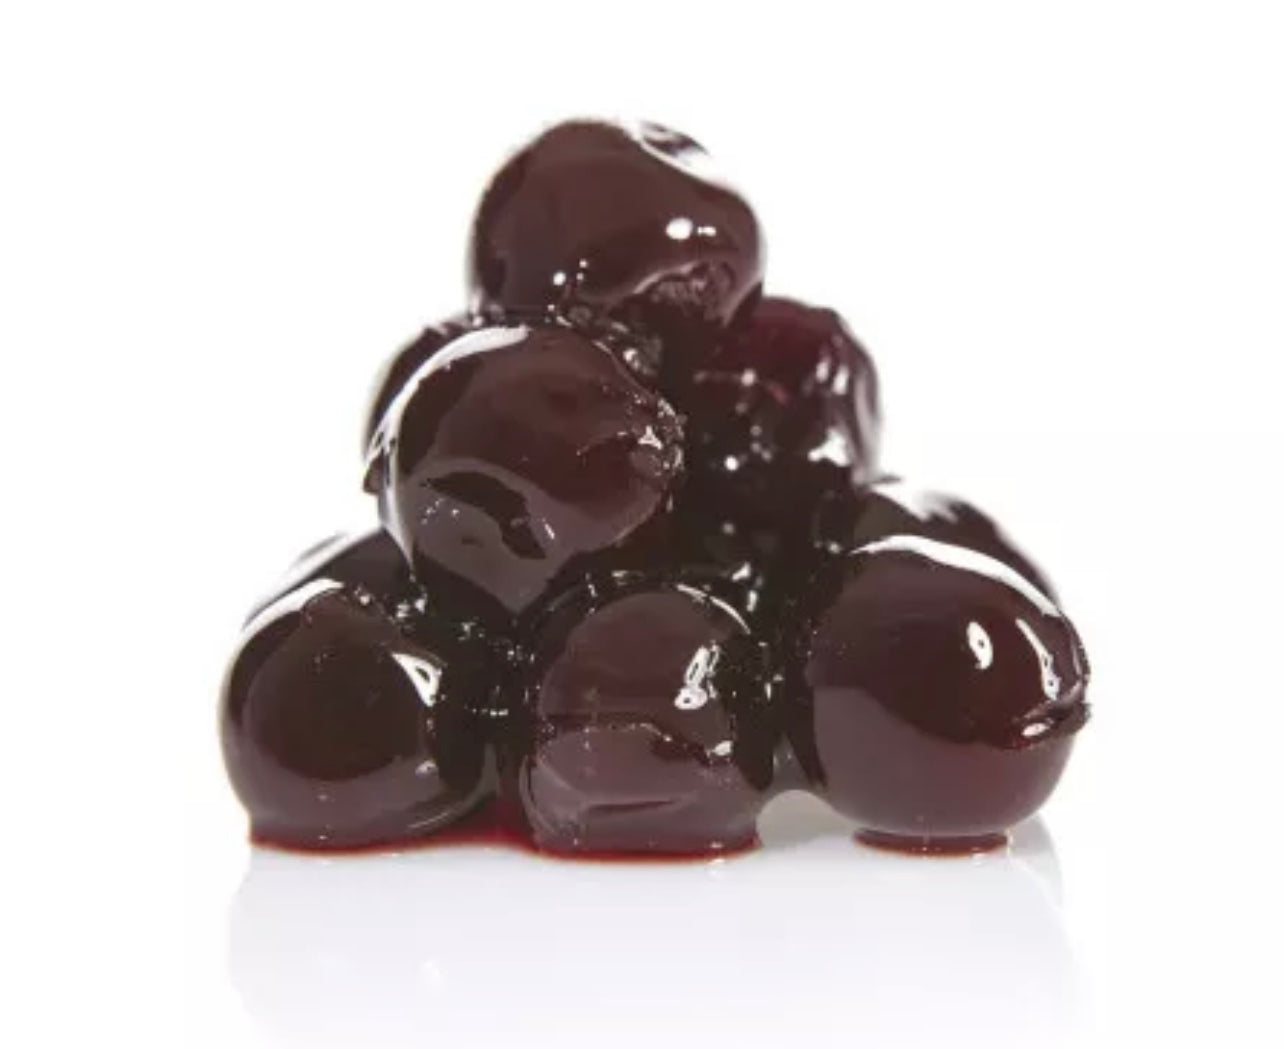 Amarena pitted cherries - 910g